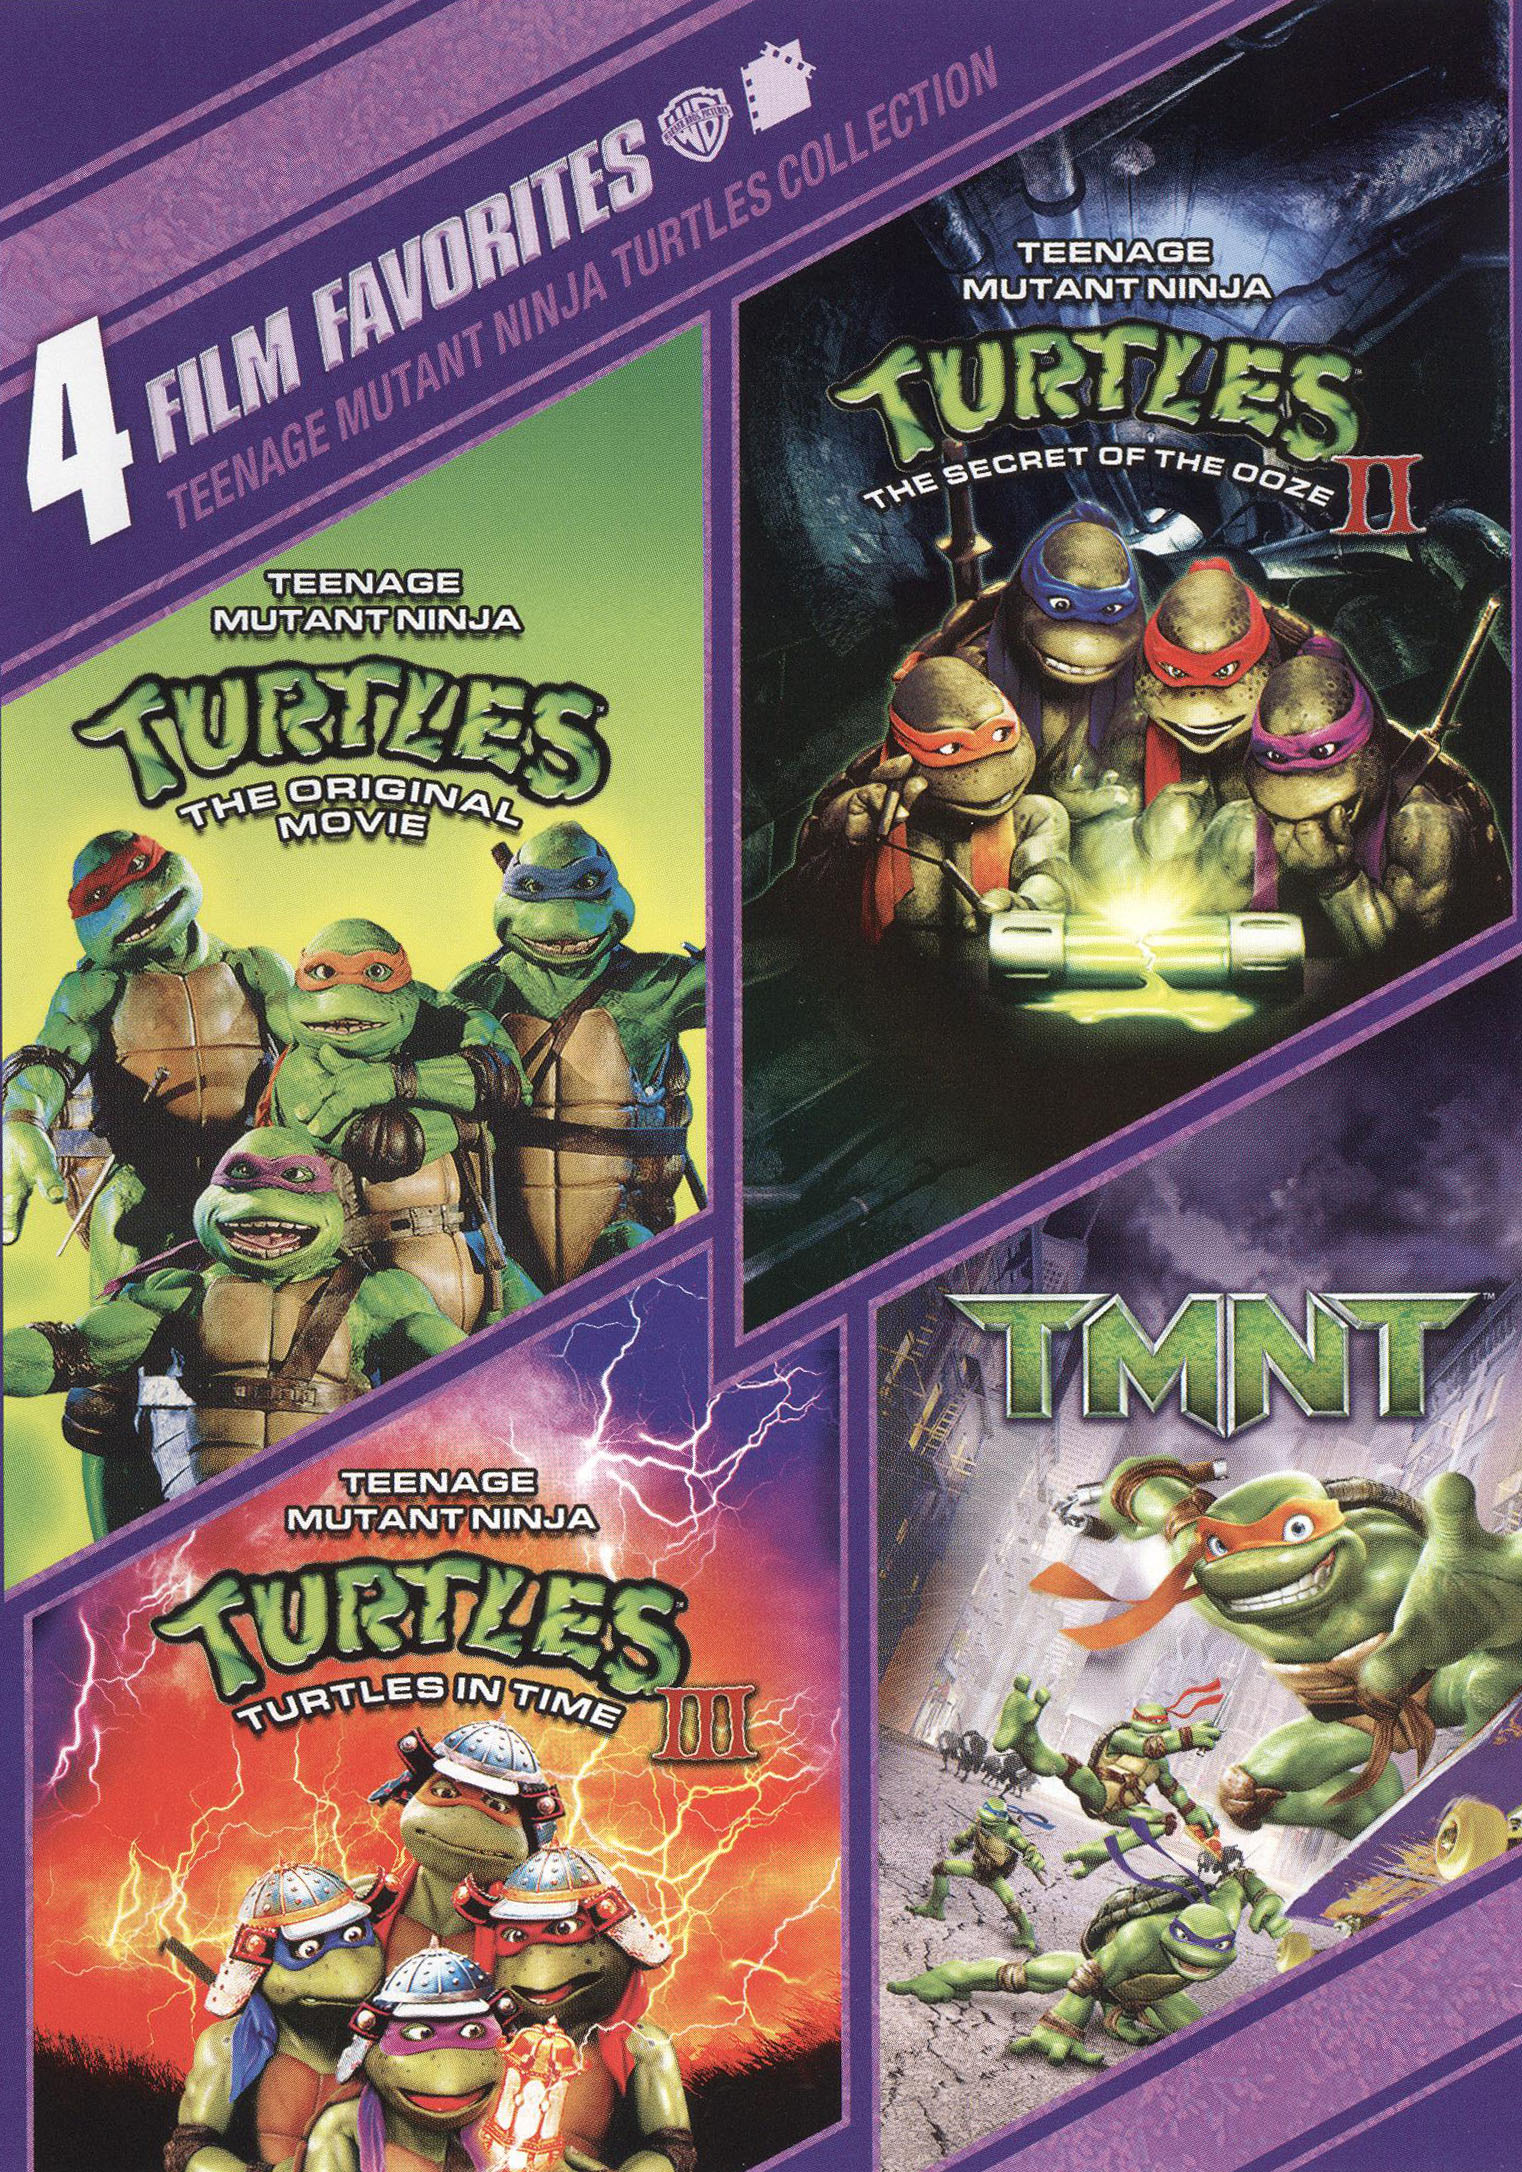 Teenage Mutant Ninja Turtles Collection: 4 Film Favorites [2 Discs] [DVD] -  Best Buy